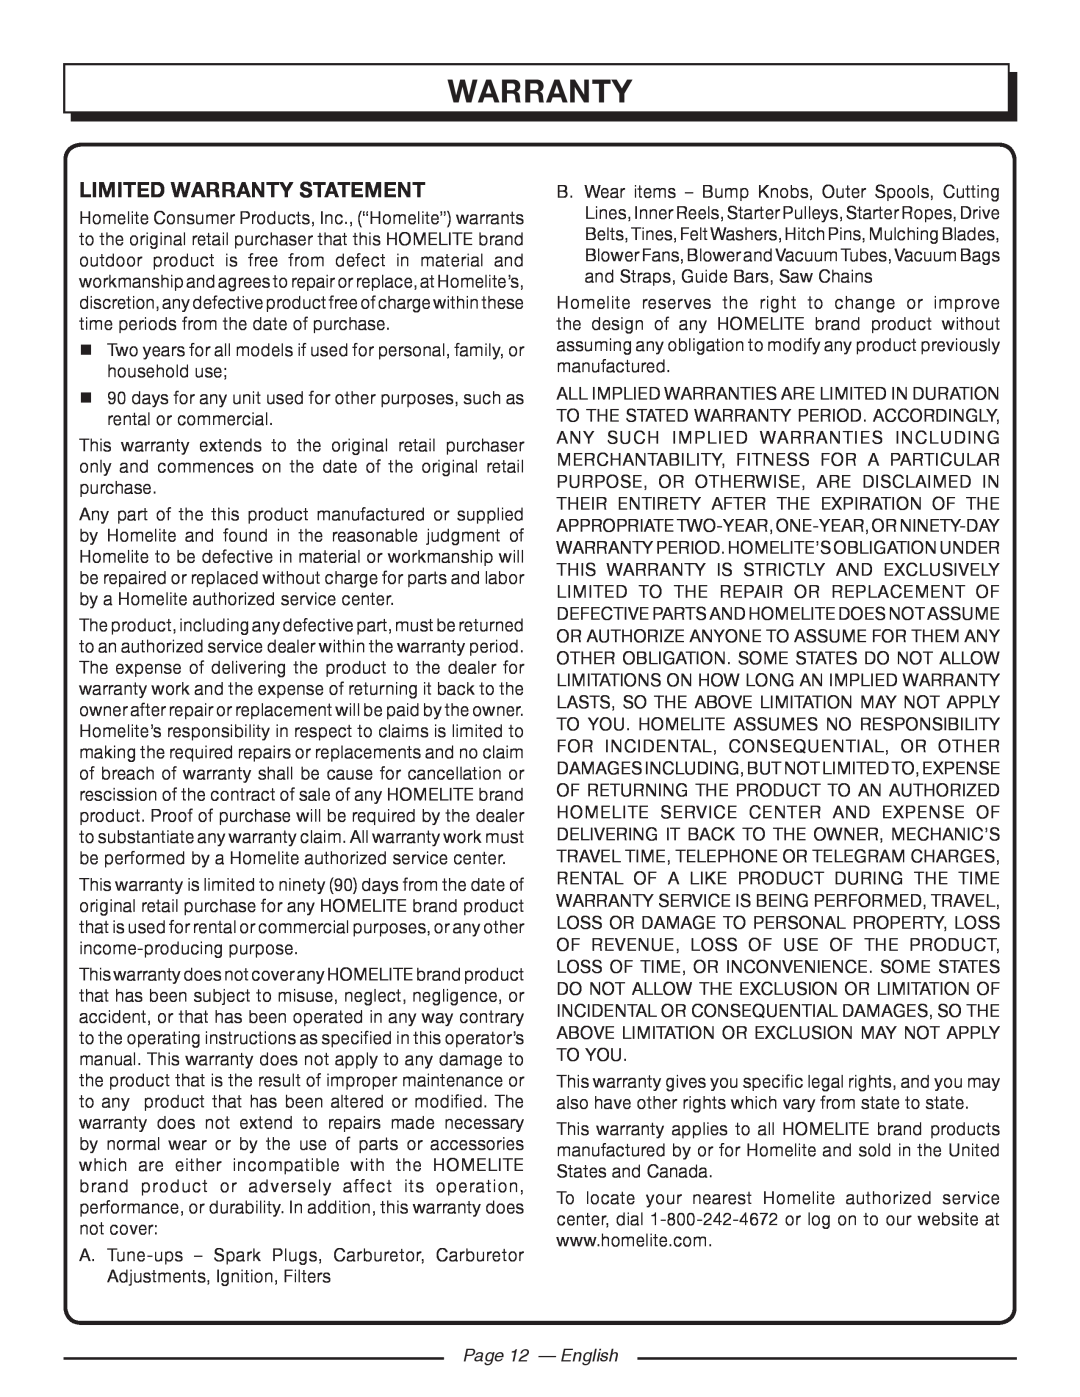 Homelite UT41112 manuel dutilisation Limited Warranty Statement, Page 12 - English 